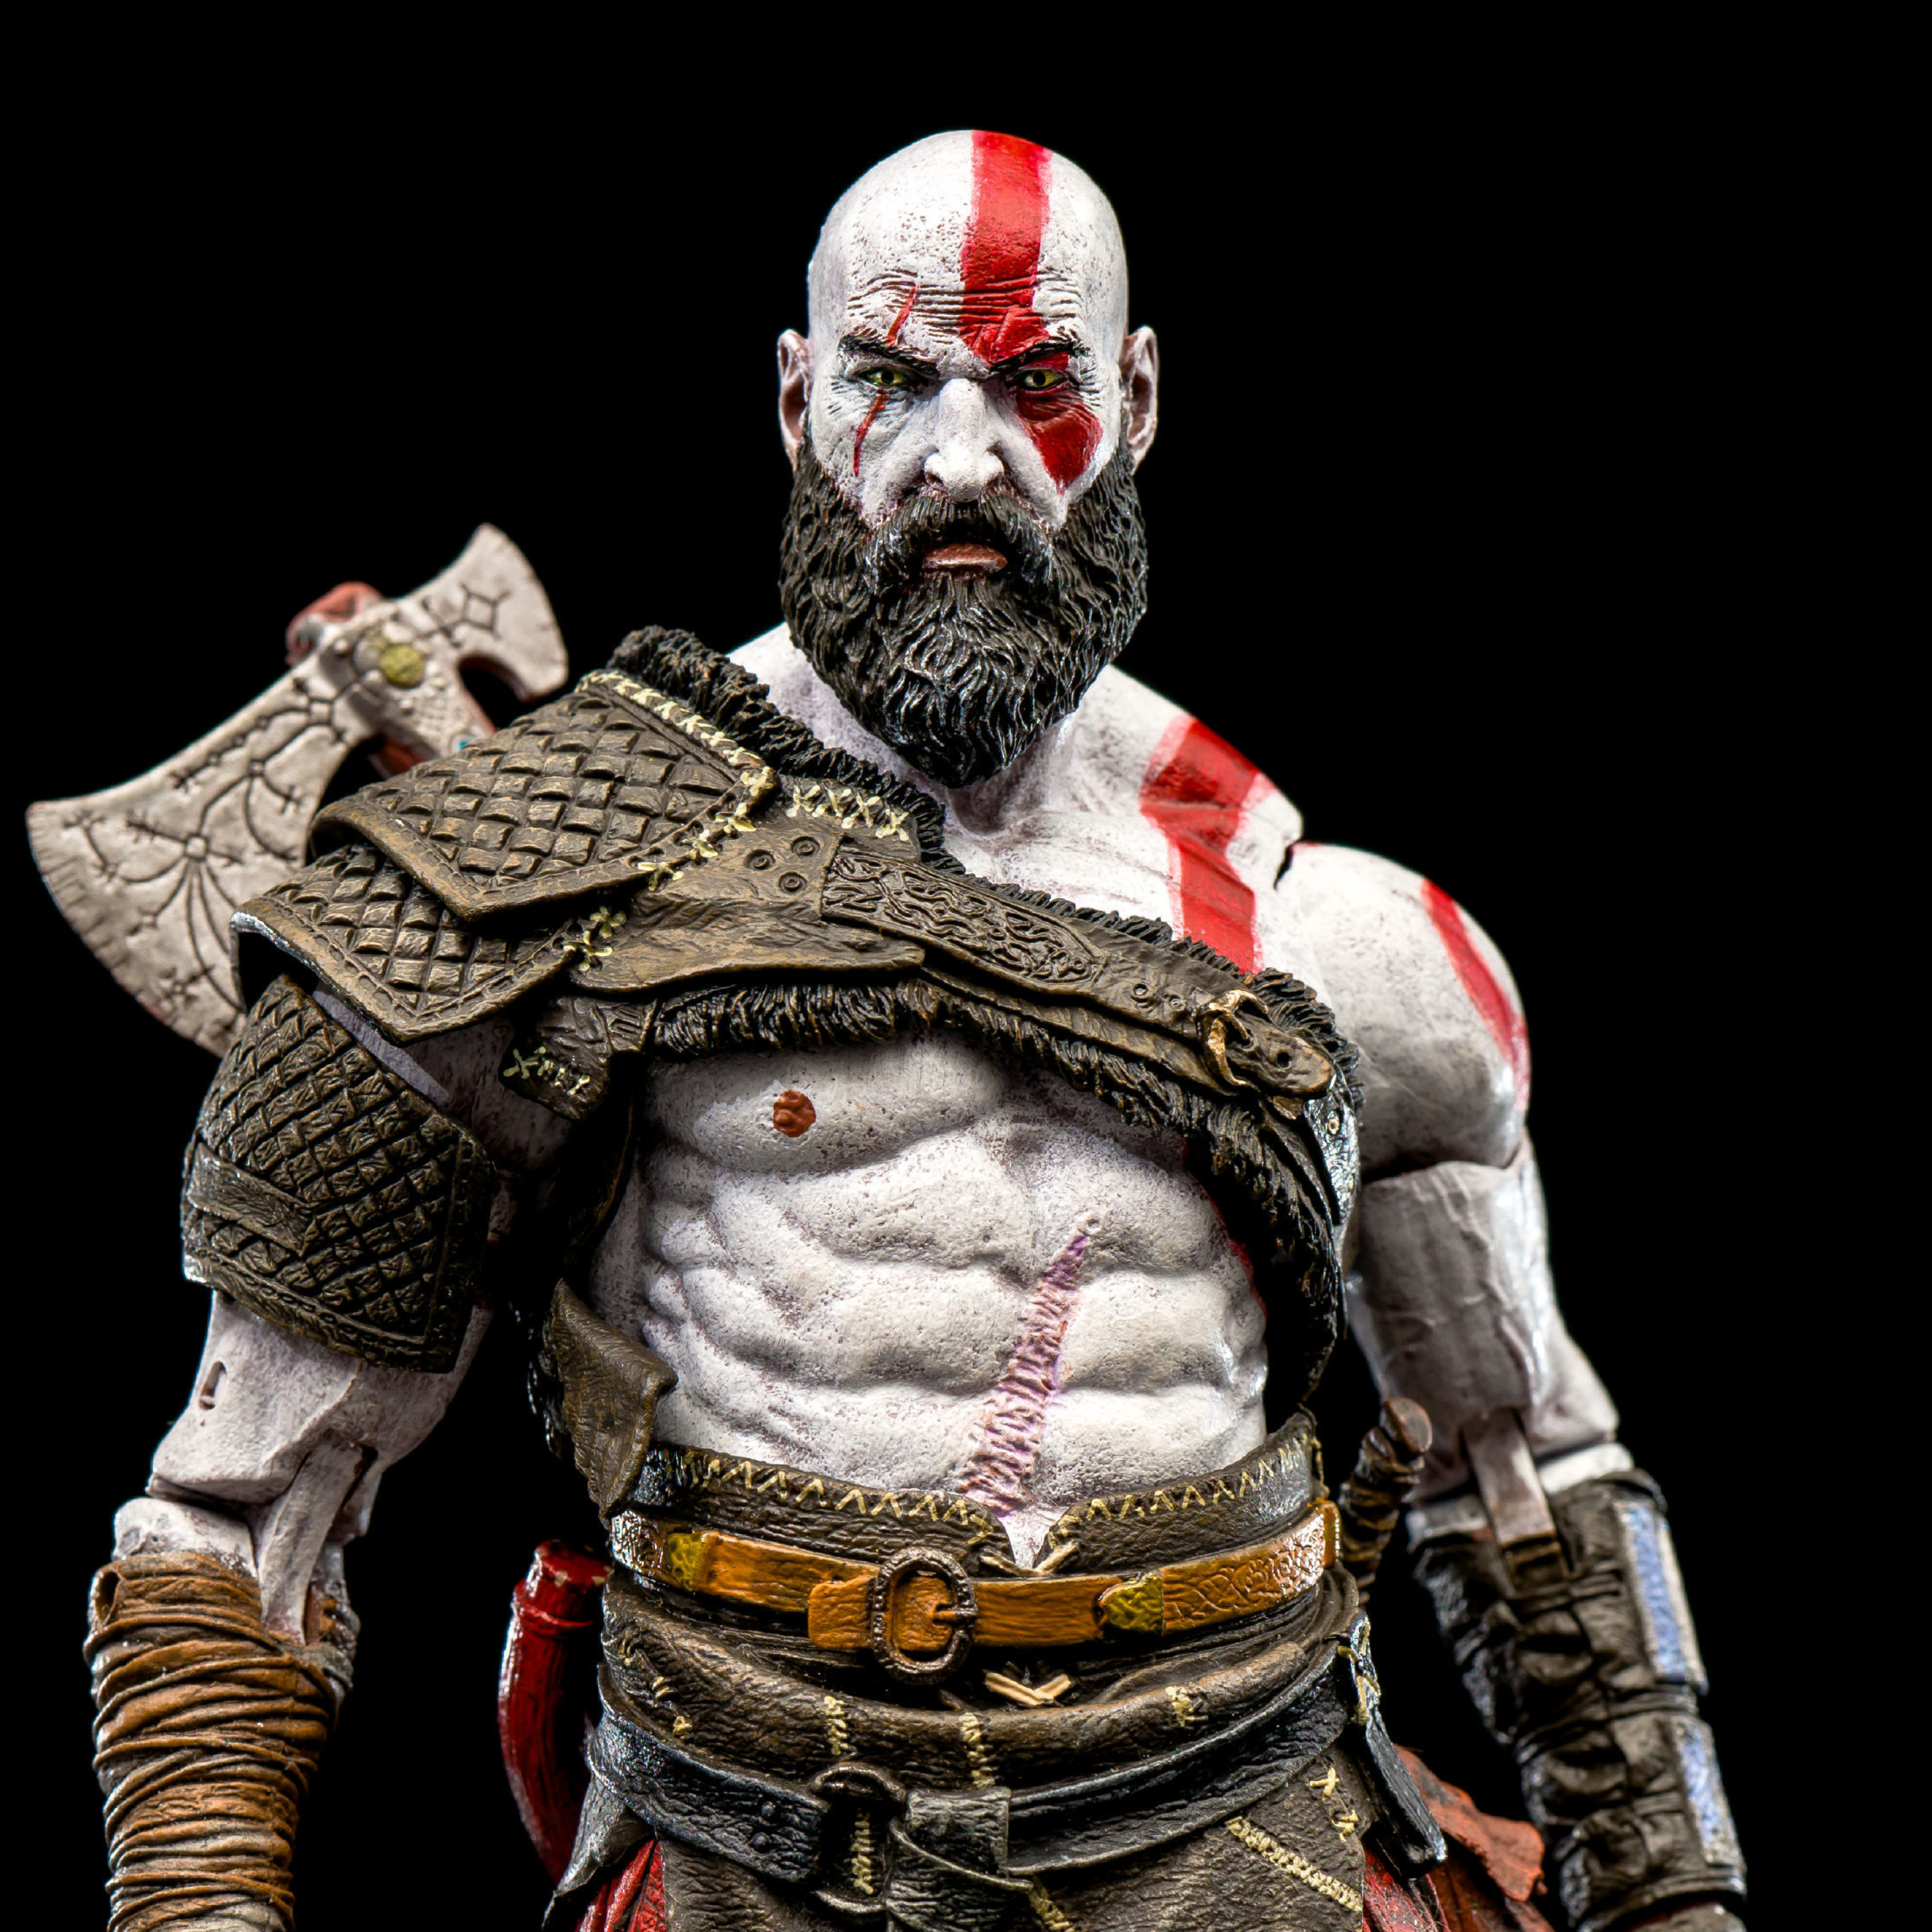 kratos gow 3 download free